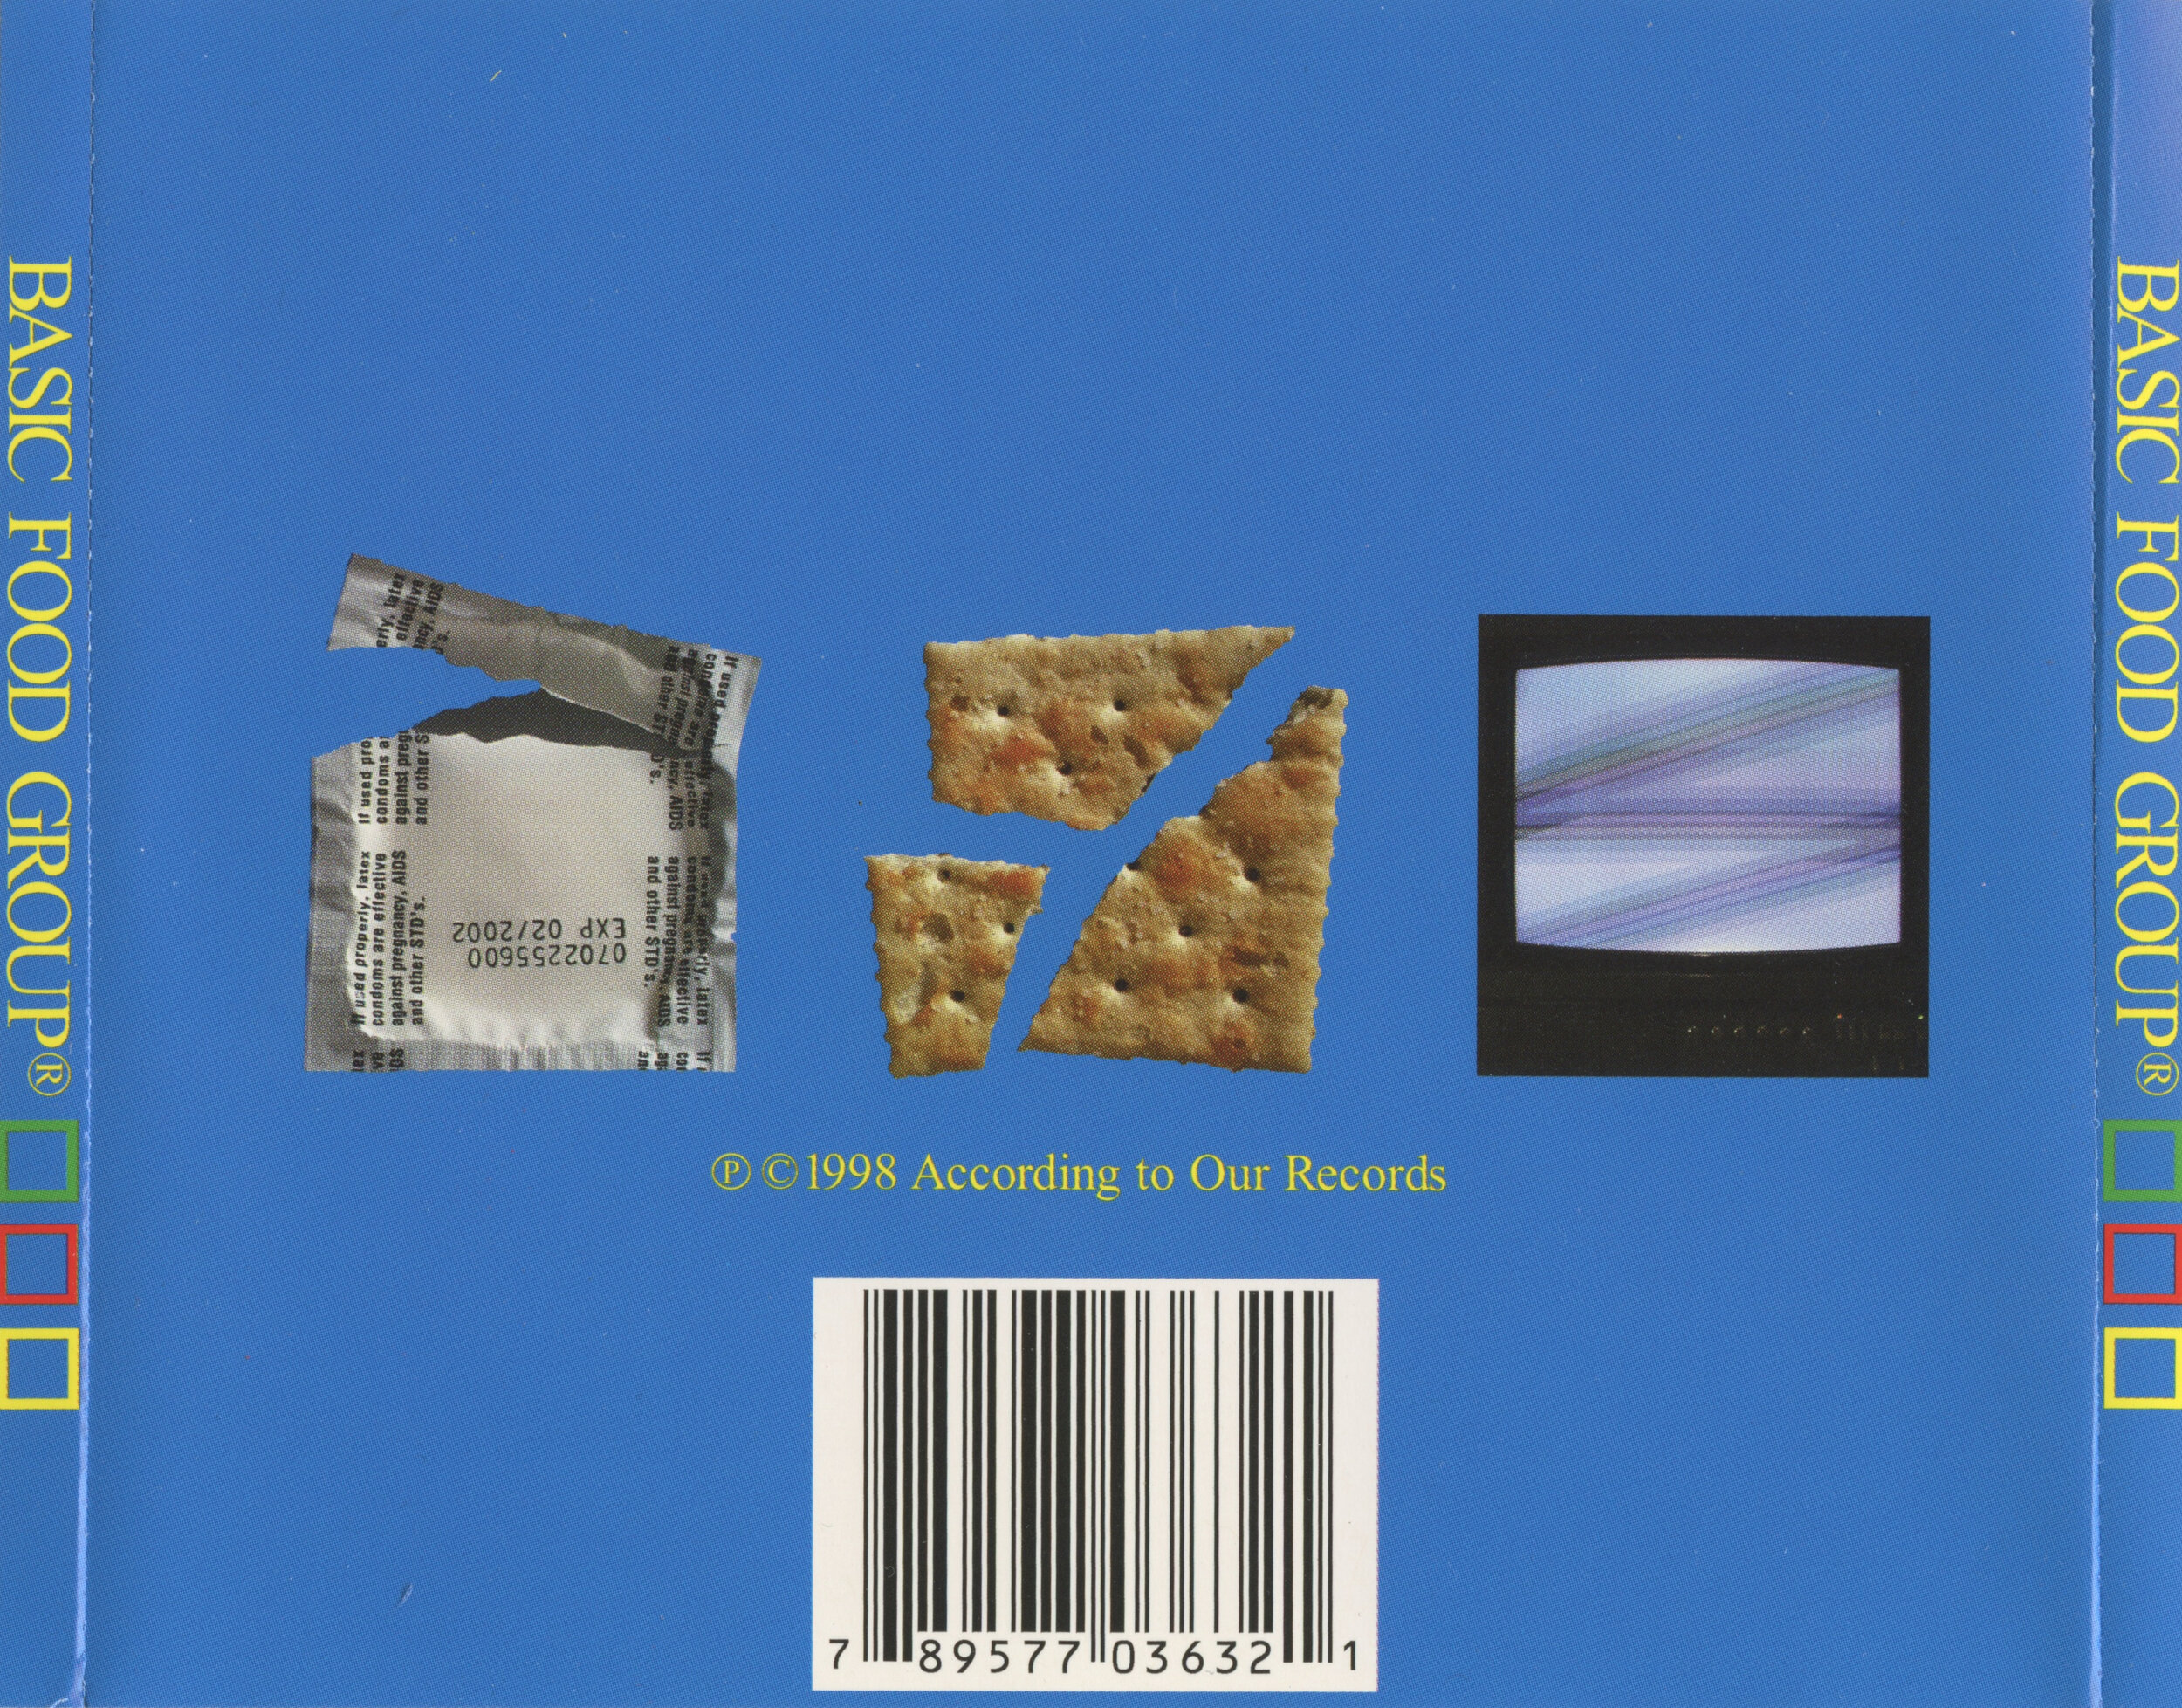 BFG Three Squares CD back cover.jpg